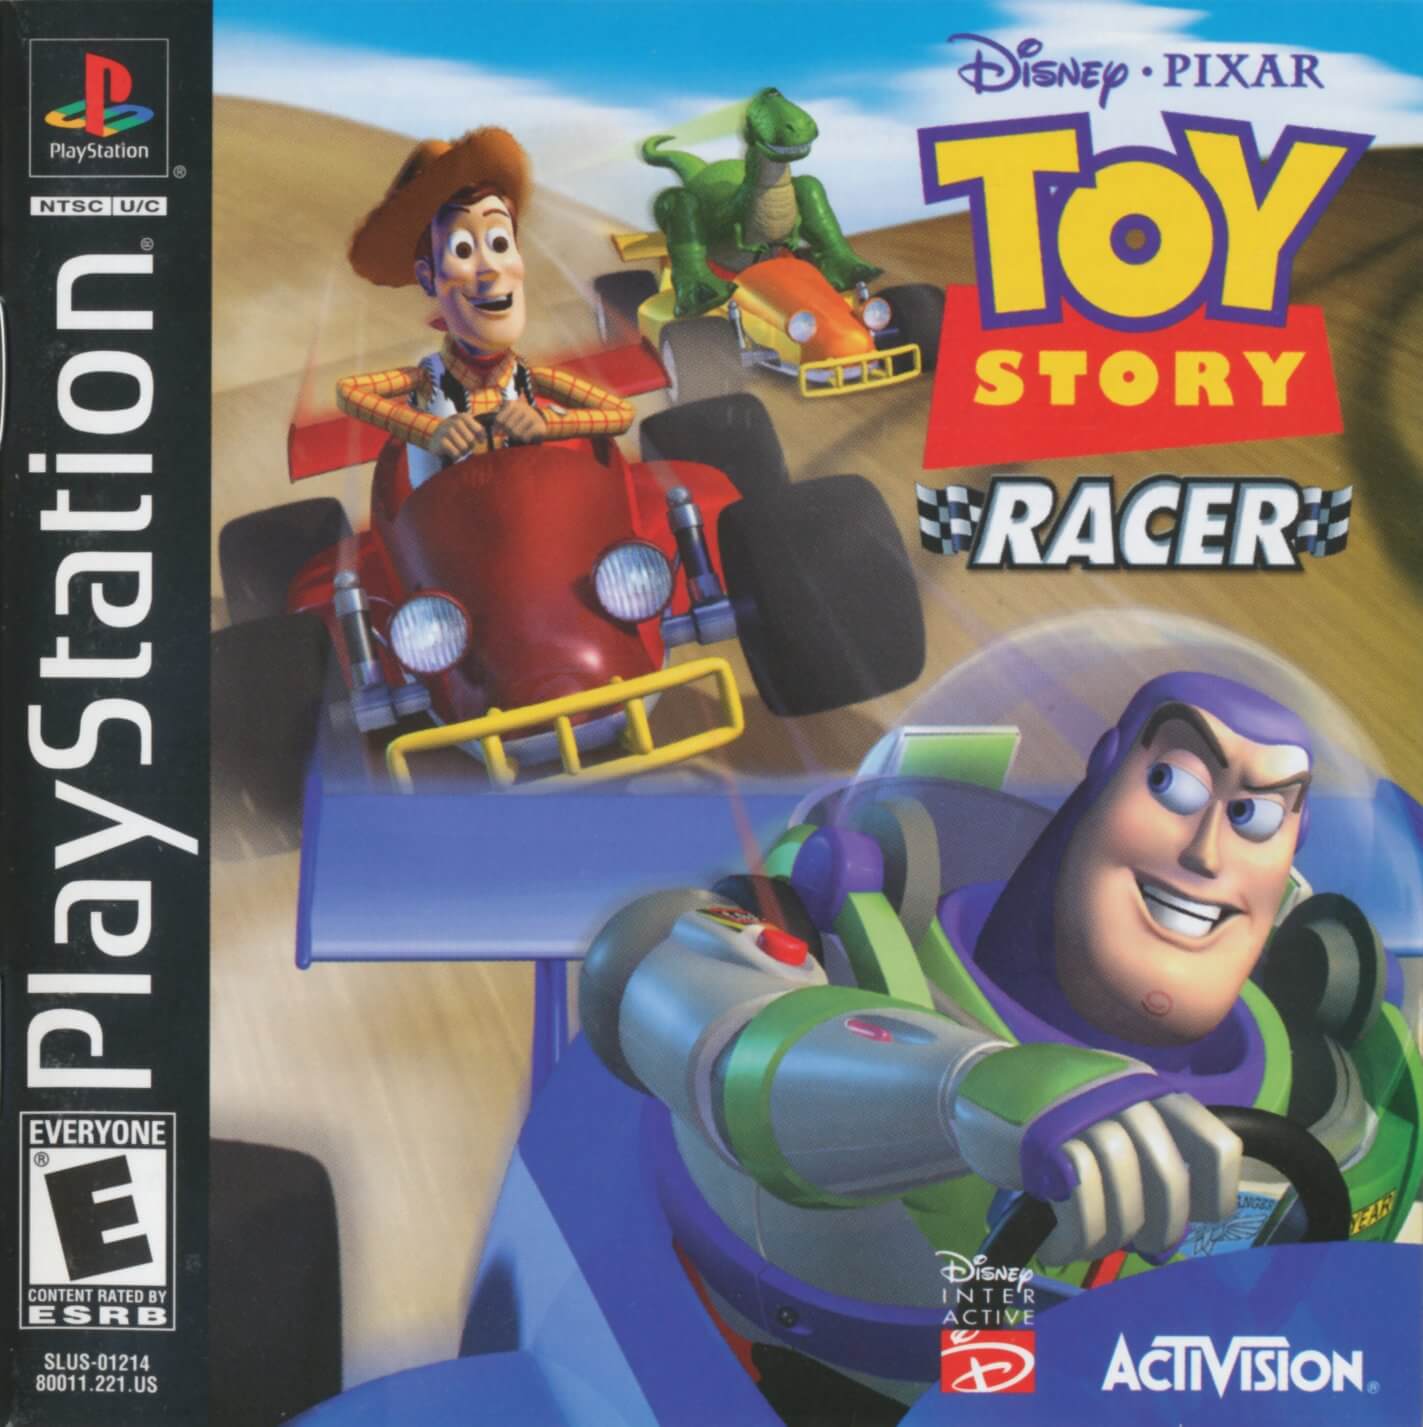 Disney-Pixar's Toy Story Racer